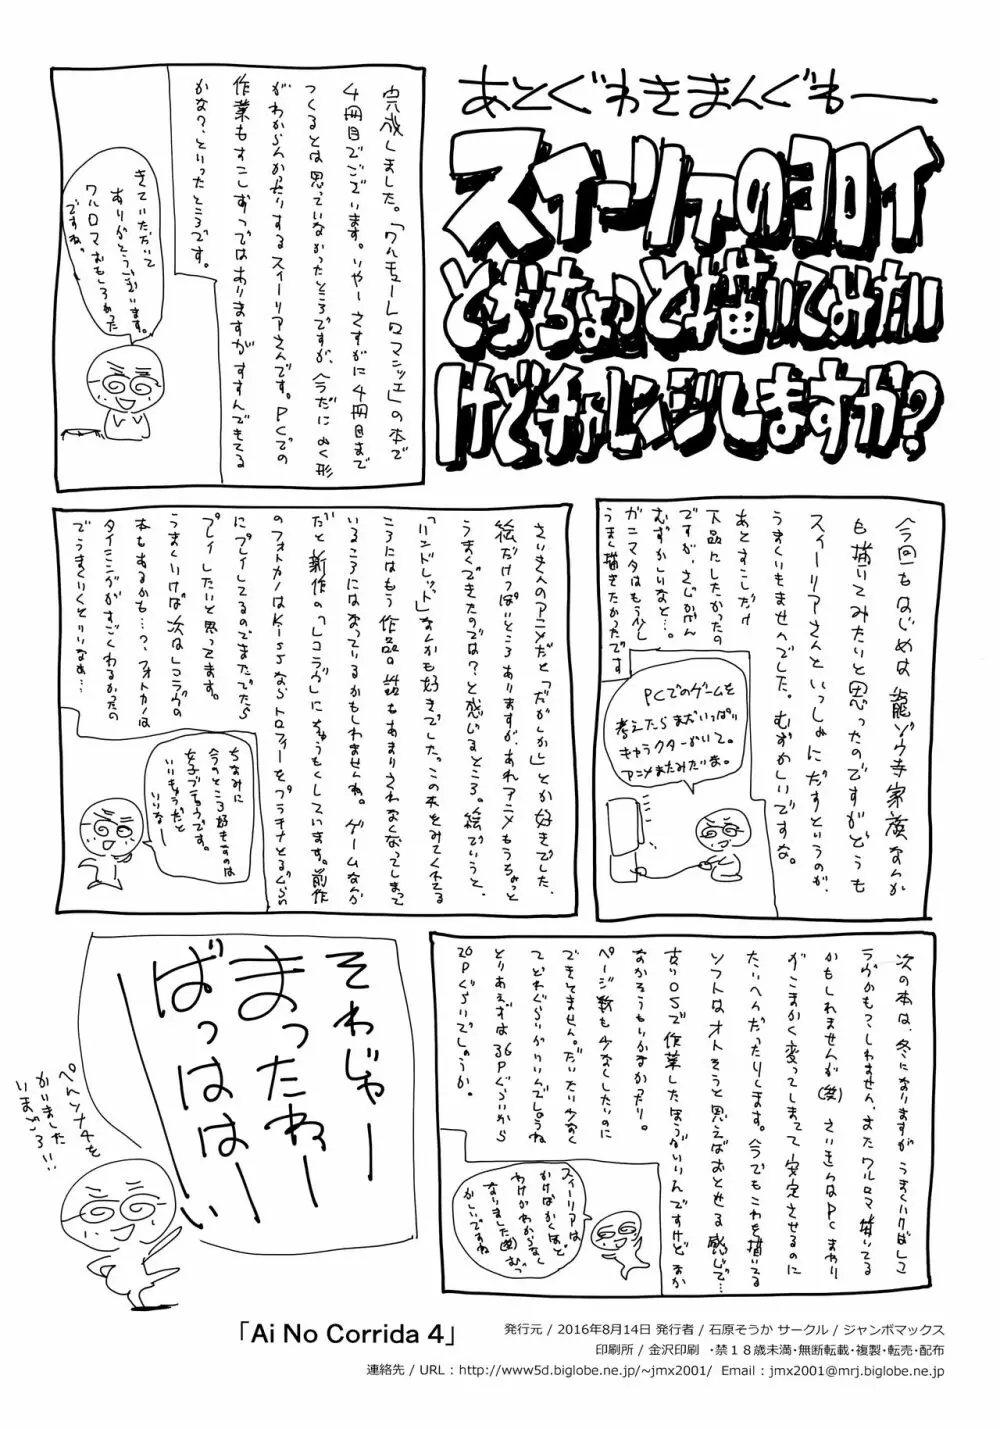 Ai No Corrida 4 - page43